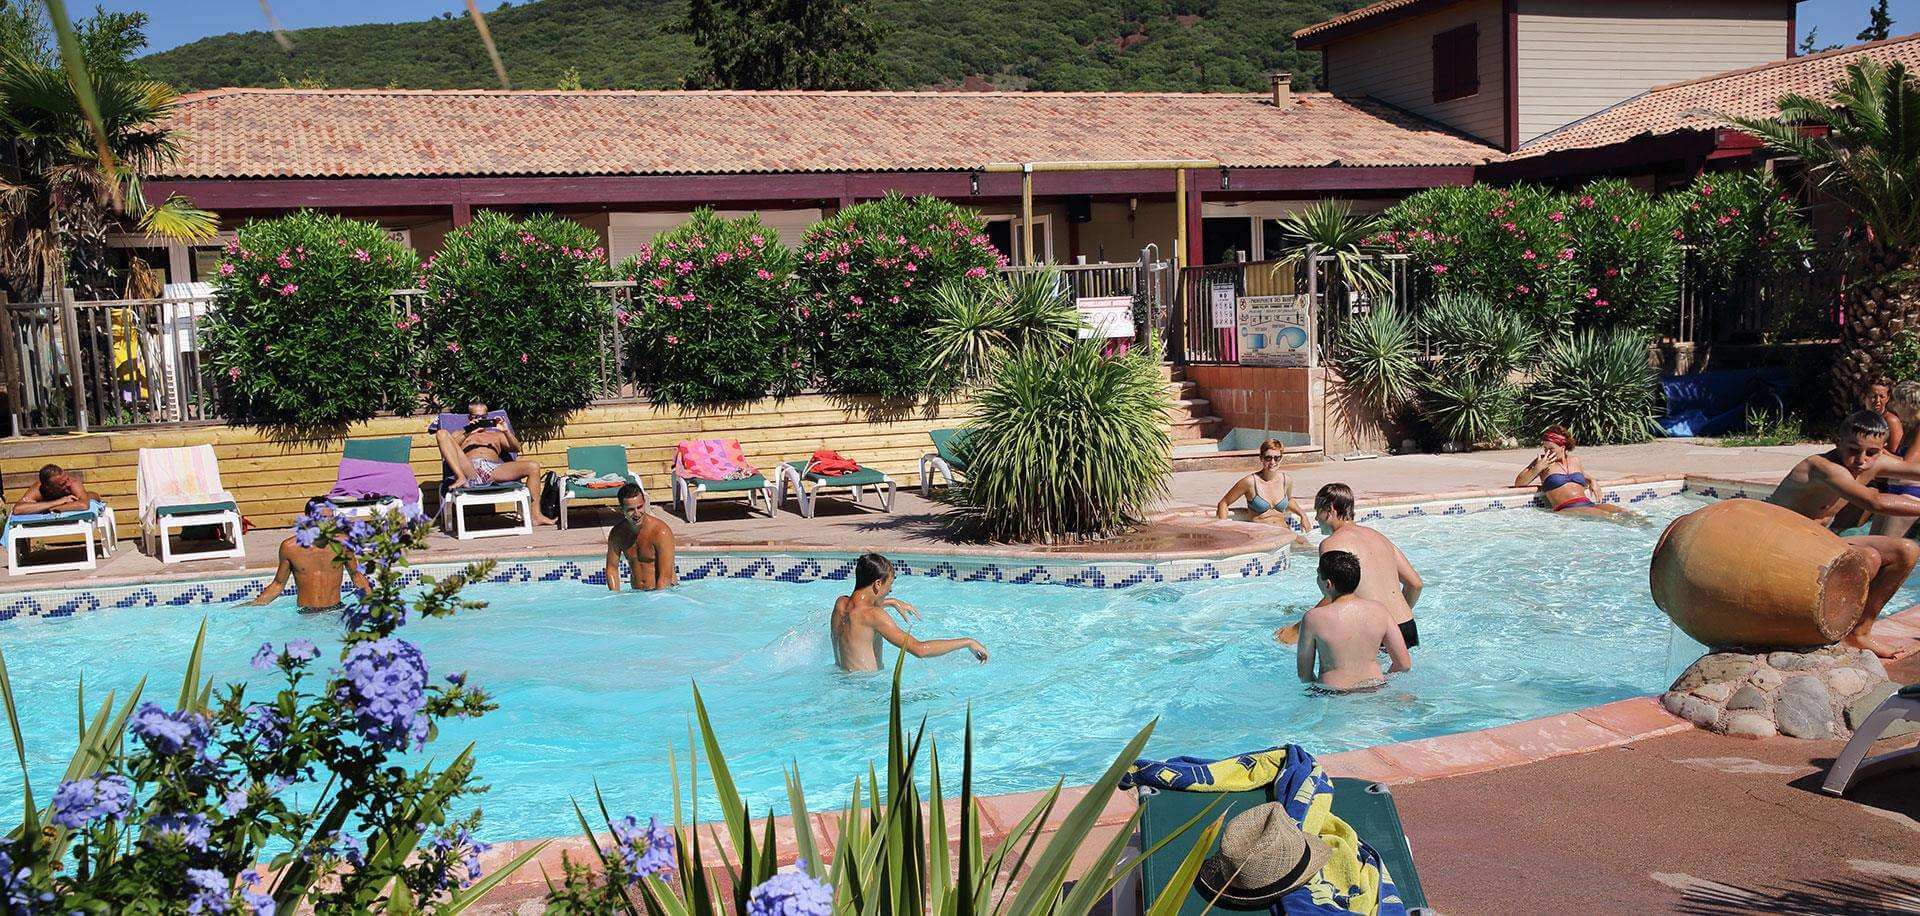 The Relais du Salagou Holiday Village swimming pool